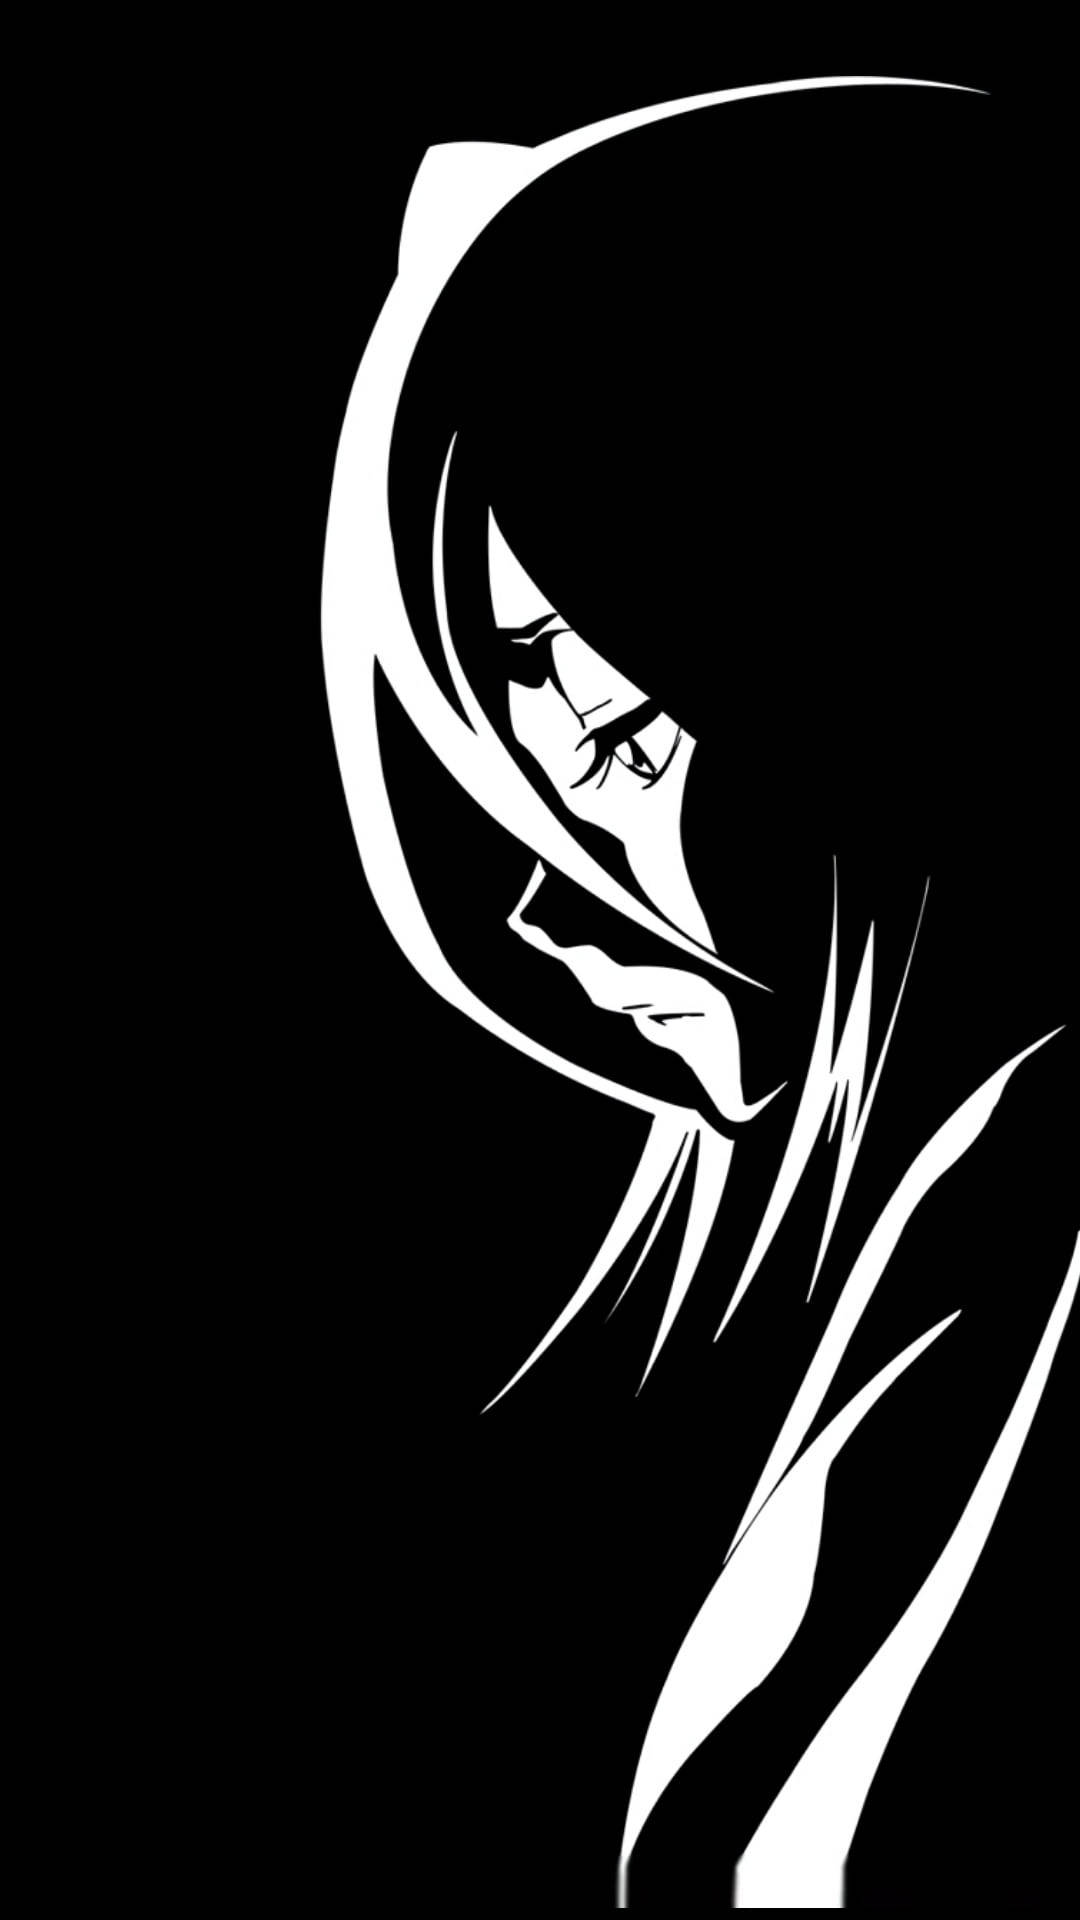 Aesthetic Sad Anime Girl Black And White